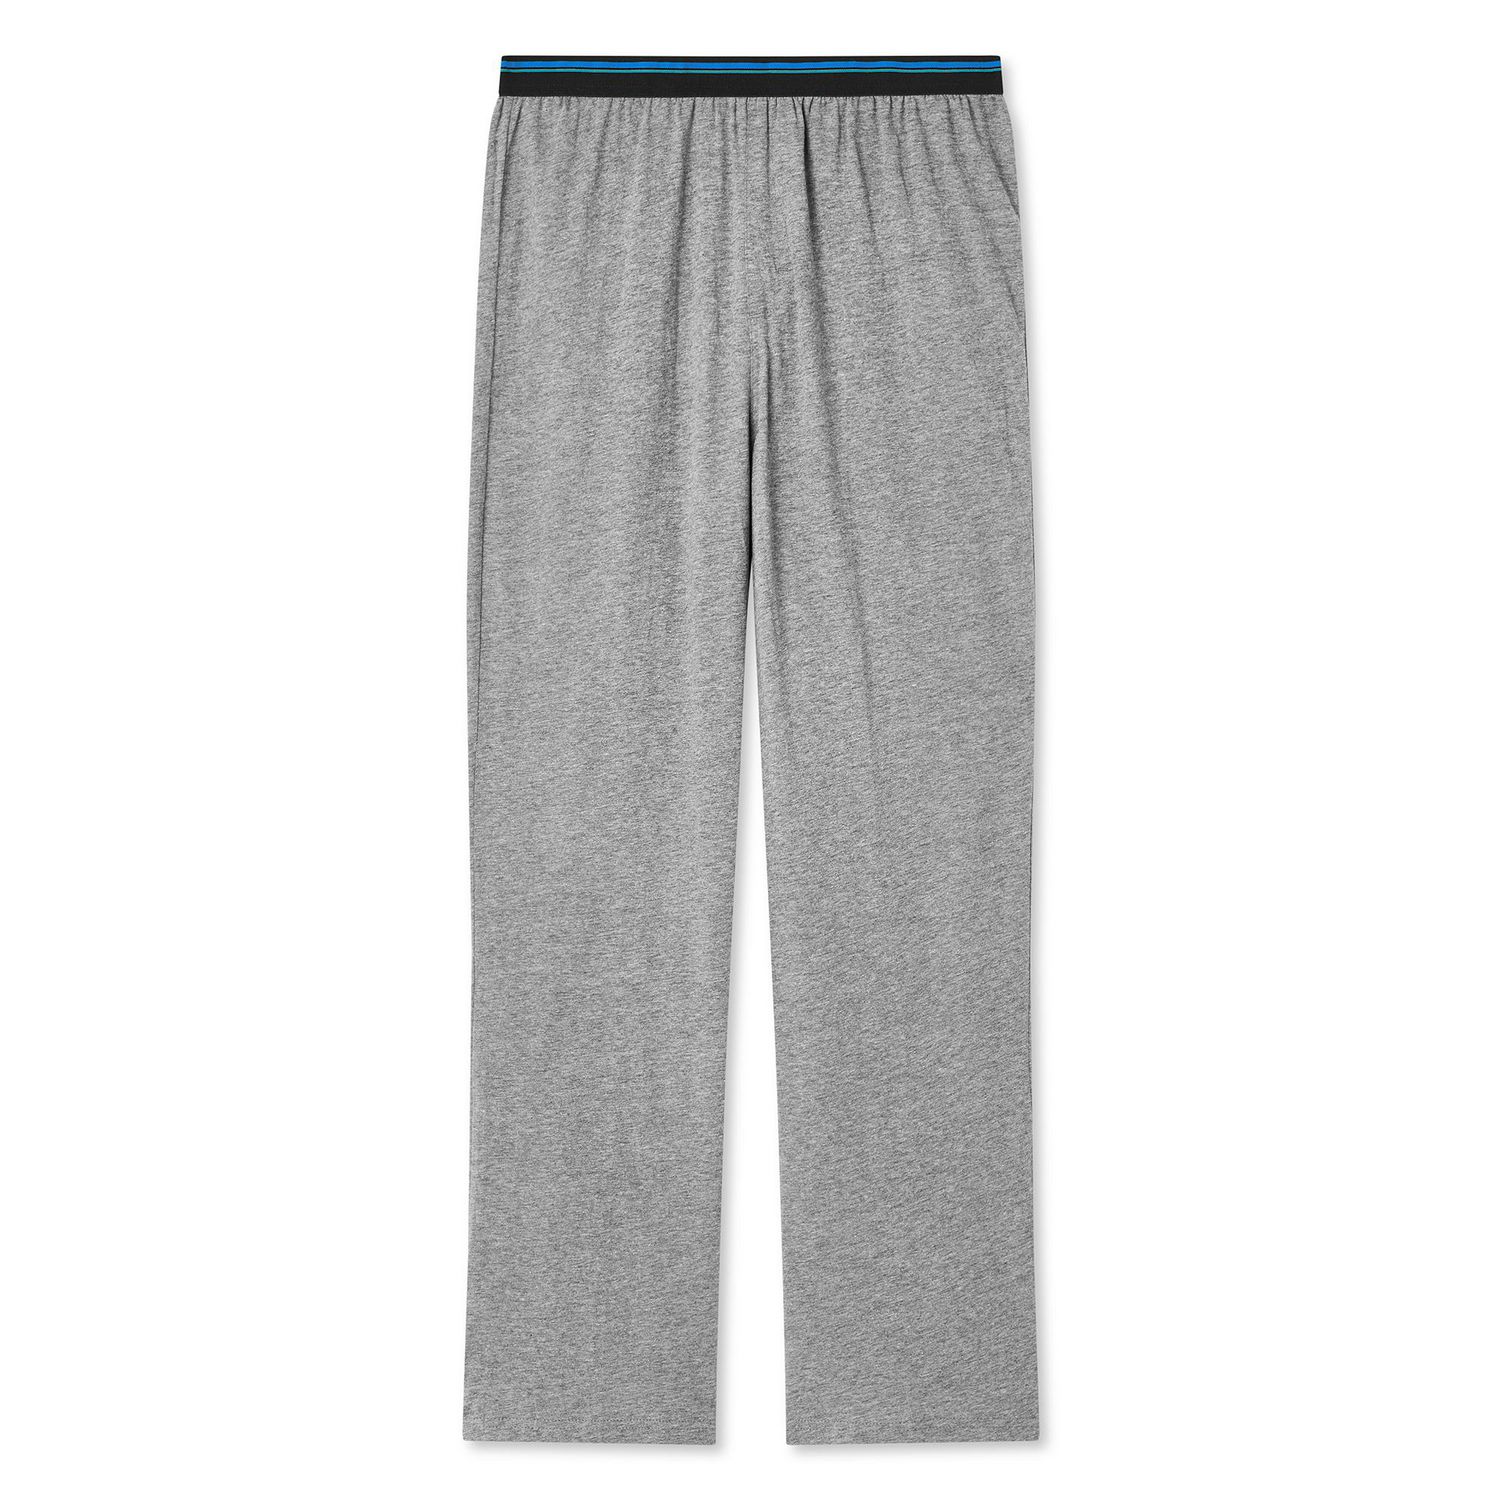 George Men’s Solid Knit Pajama Pants